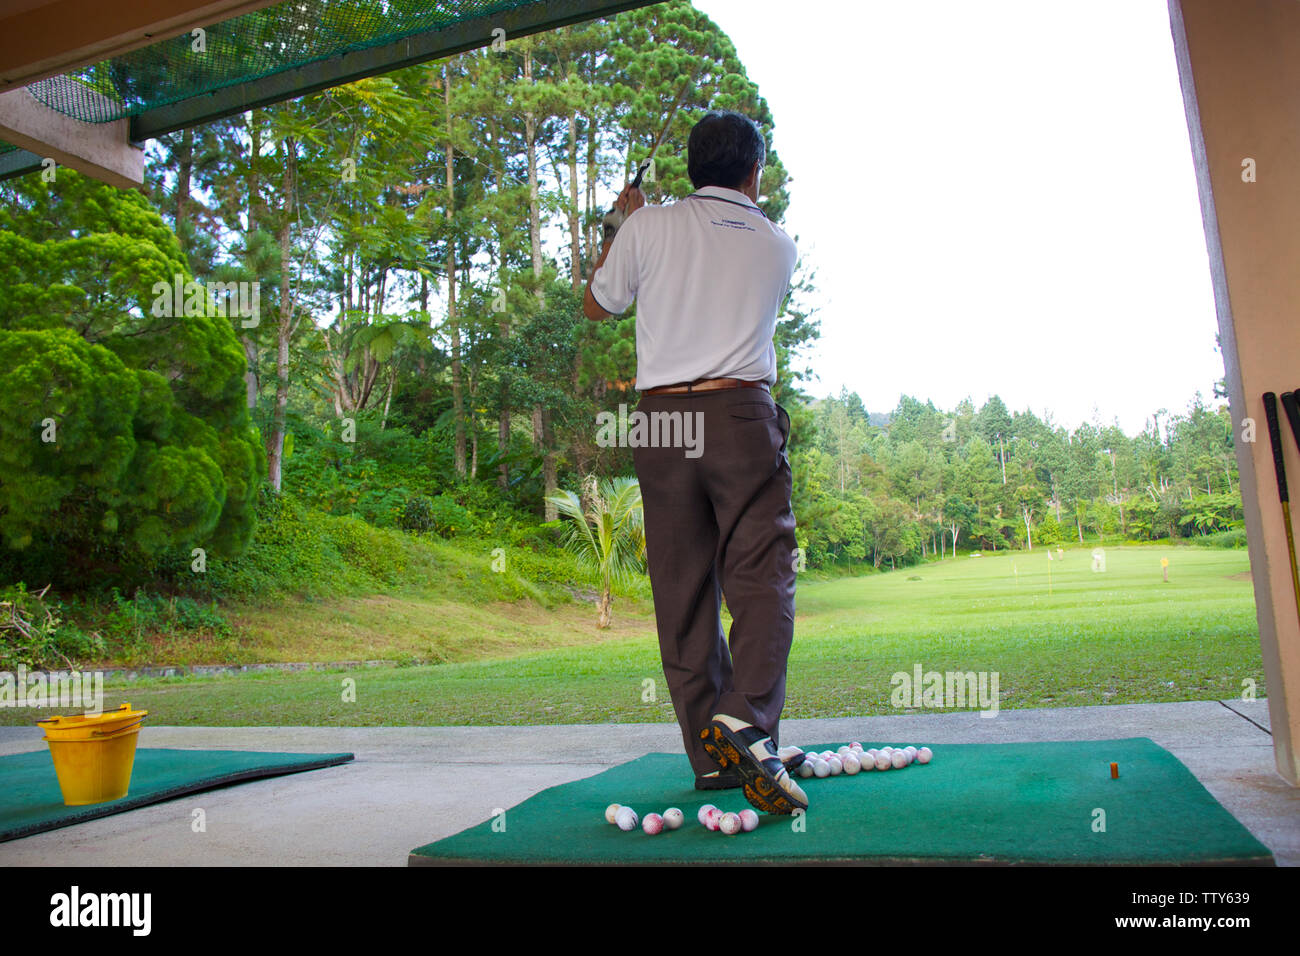 Man practicing golf at driving range Stock Photo